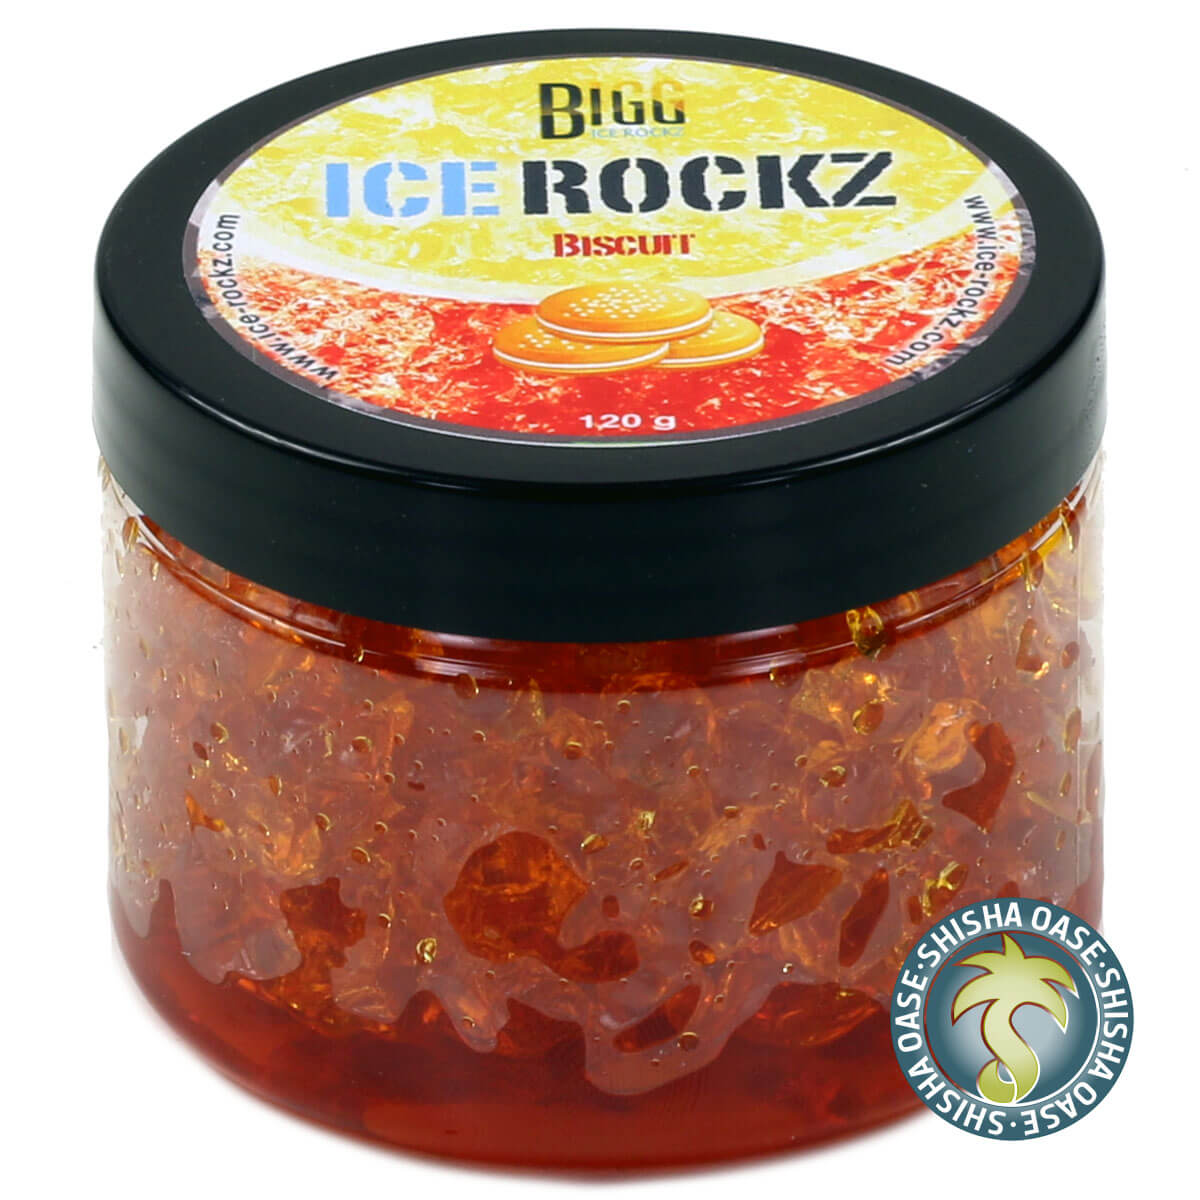 Bigg Ice Rockz - Biscuit 120g